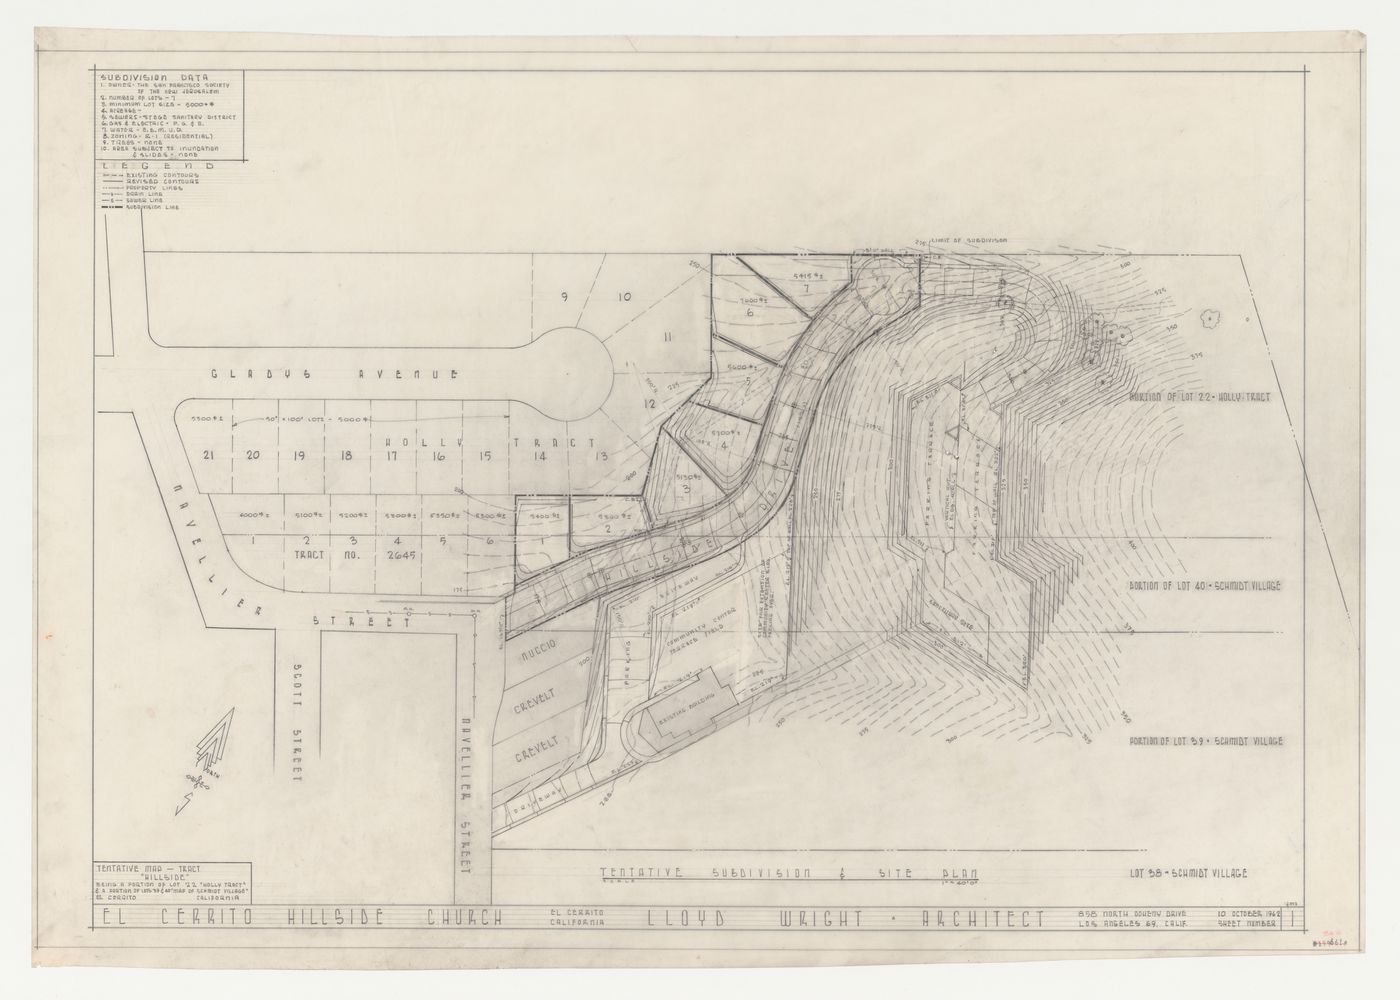 Swedenborg Memorial Chapel, El Cerrito, California: Site plan including existing buildings on project site